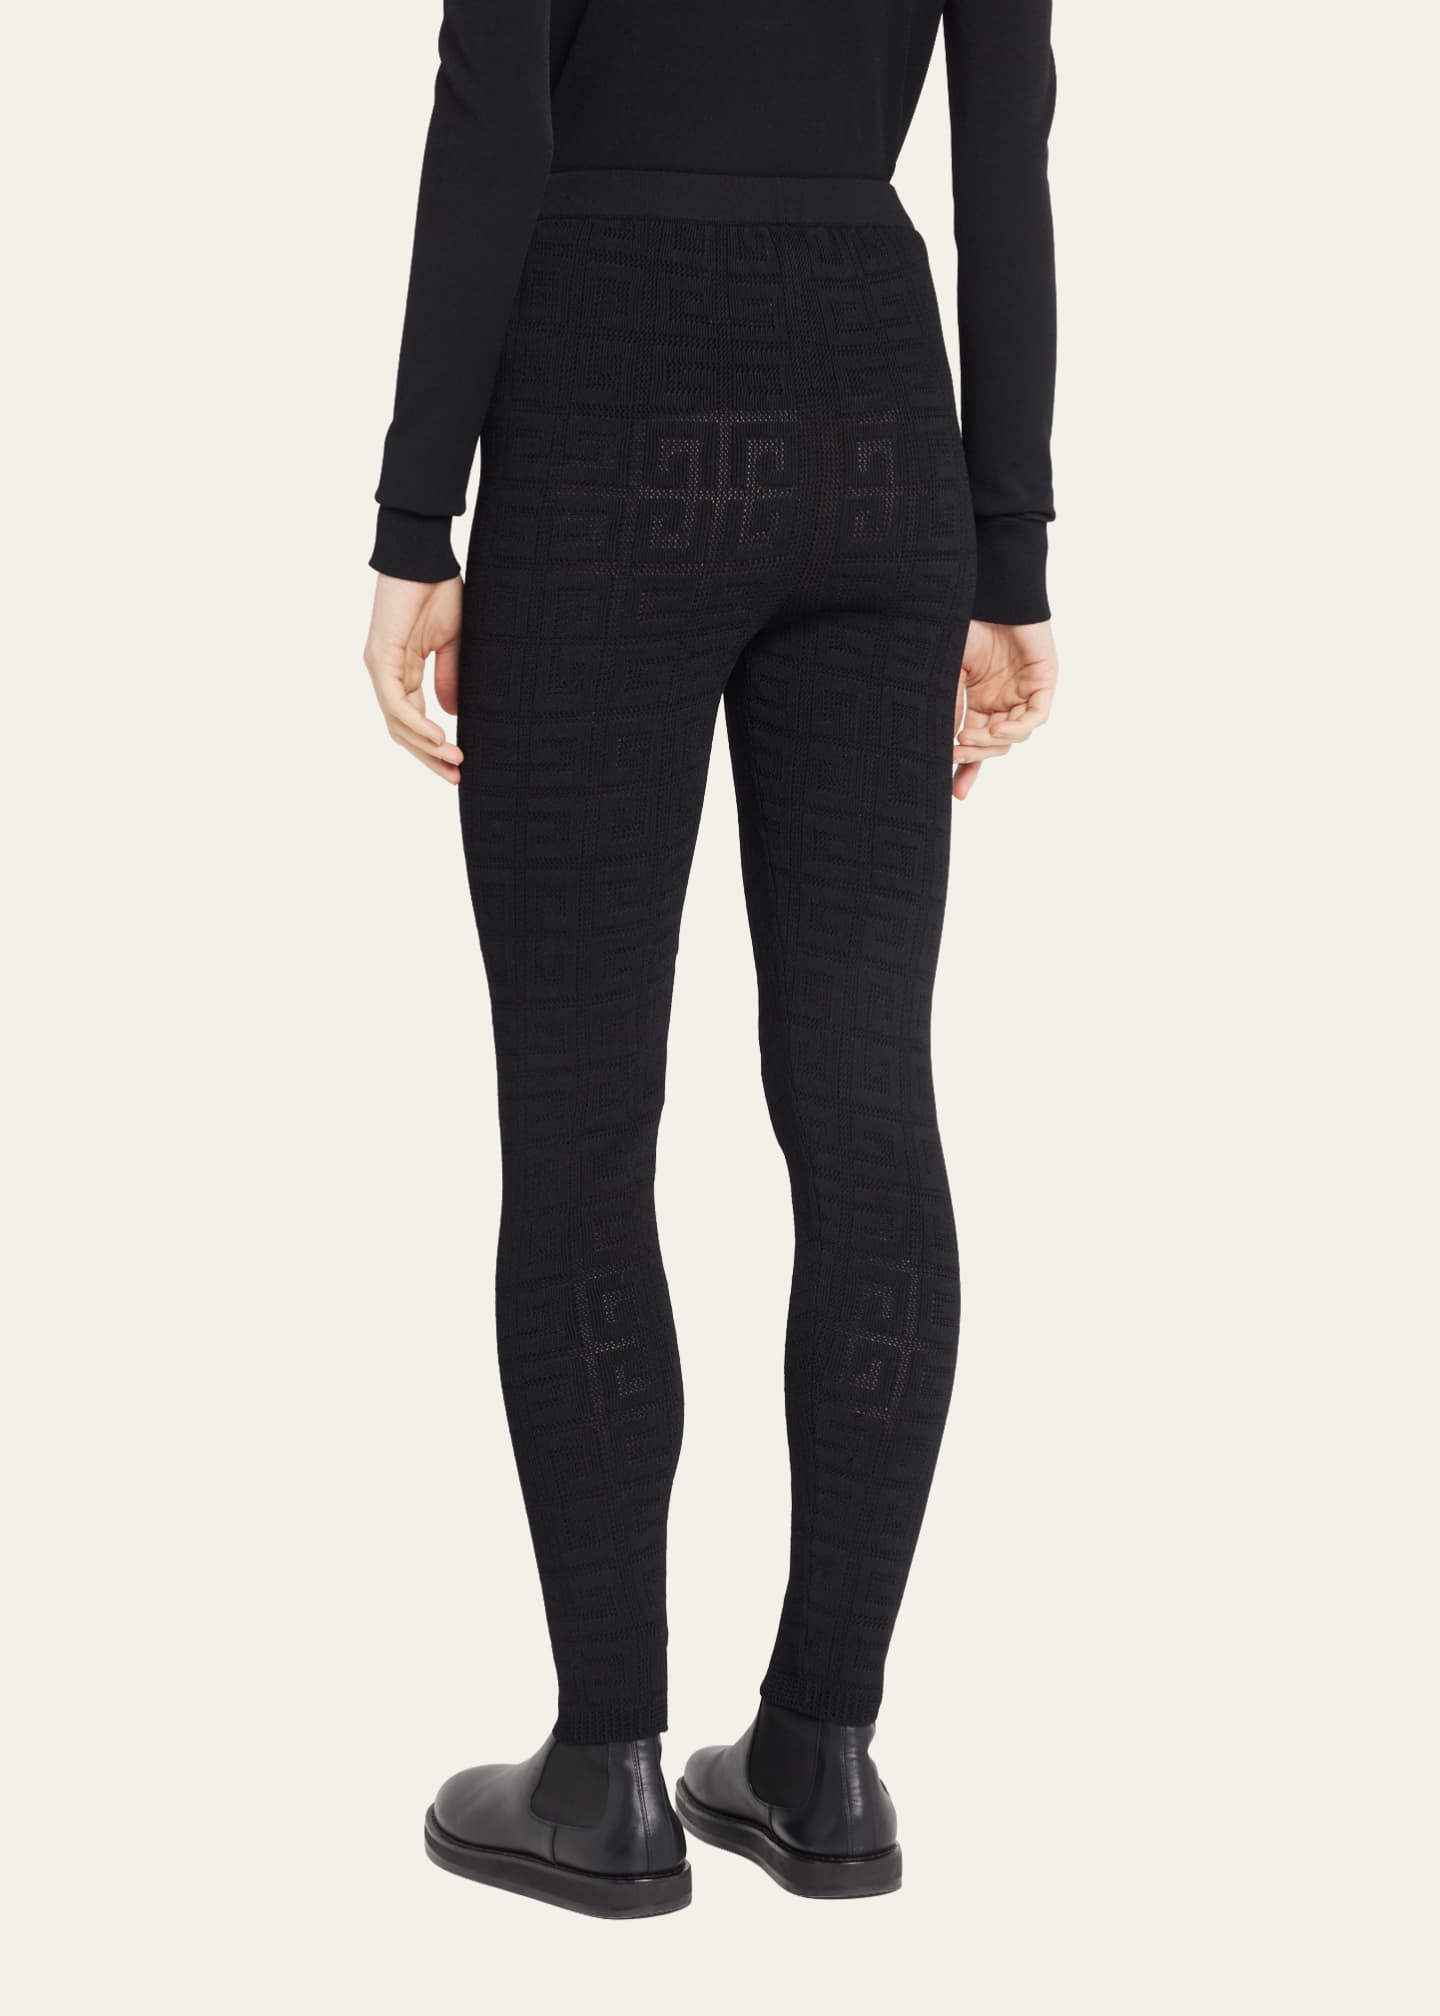 Givenchy Black Knit Side Strip Detail Leggings M - ShopStyle